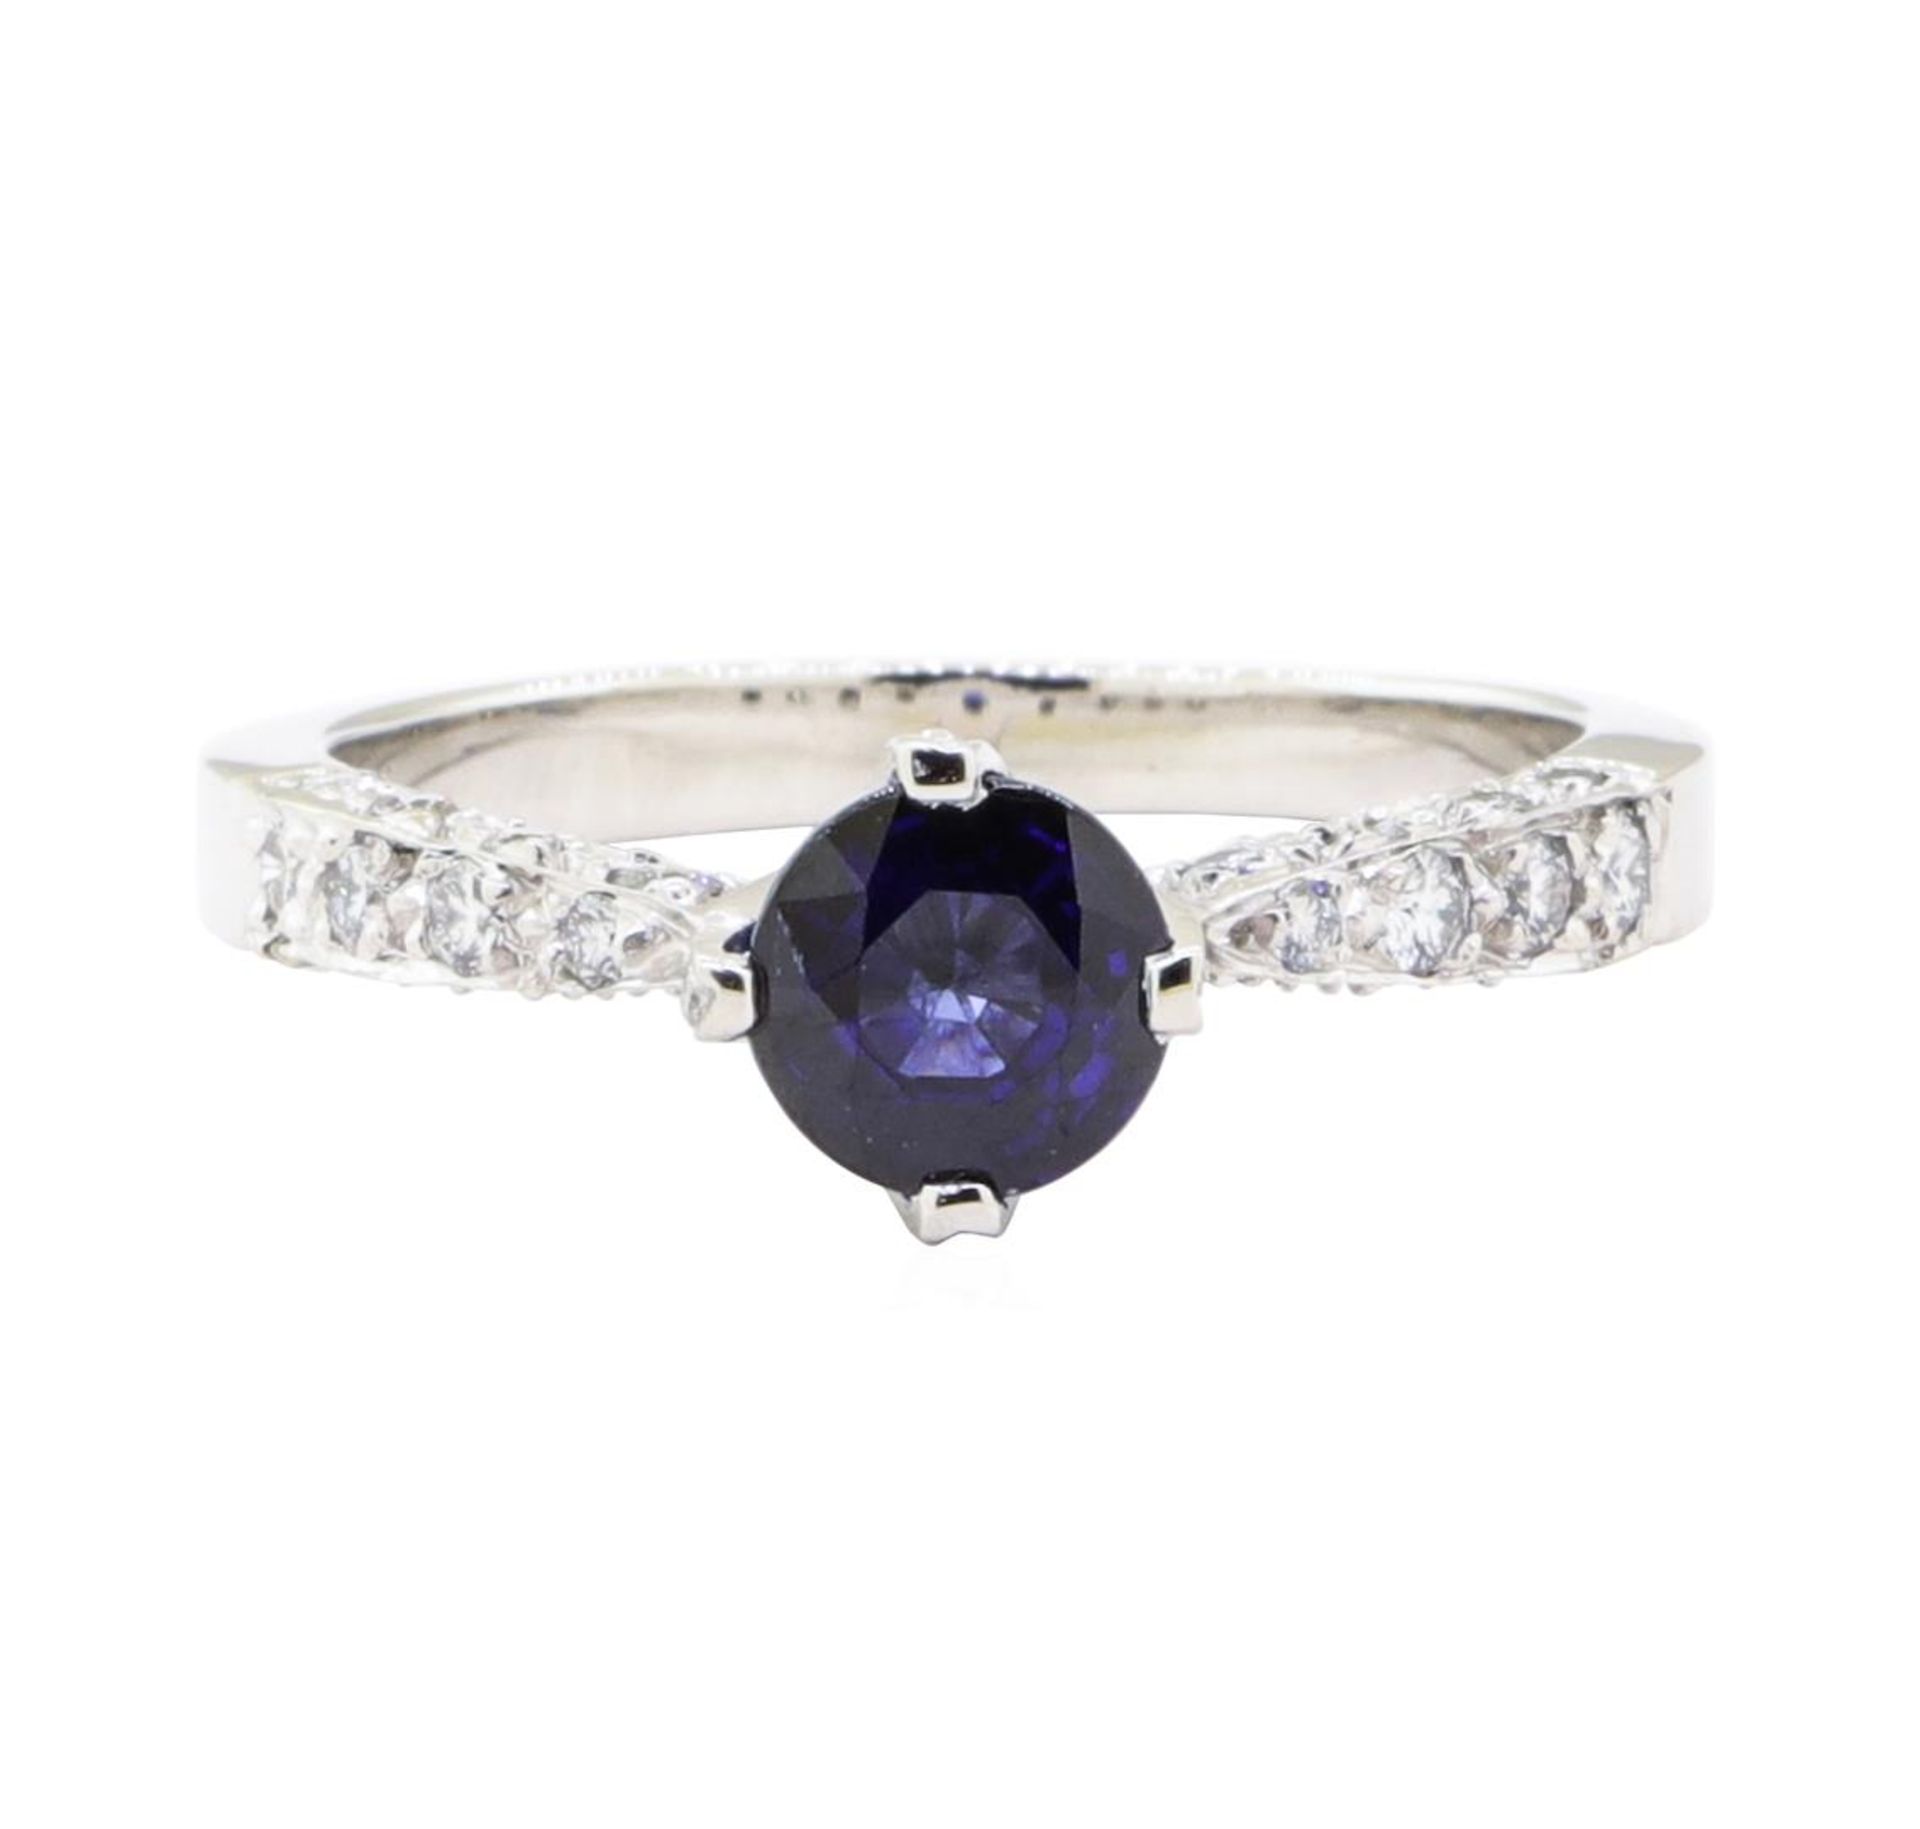 1.69 ctw Sapphire And Diamond Ring - Platinum - Image 2 of 5